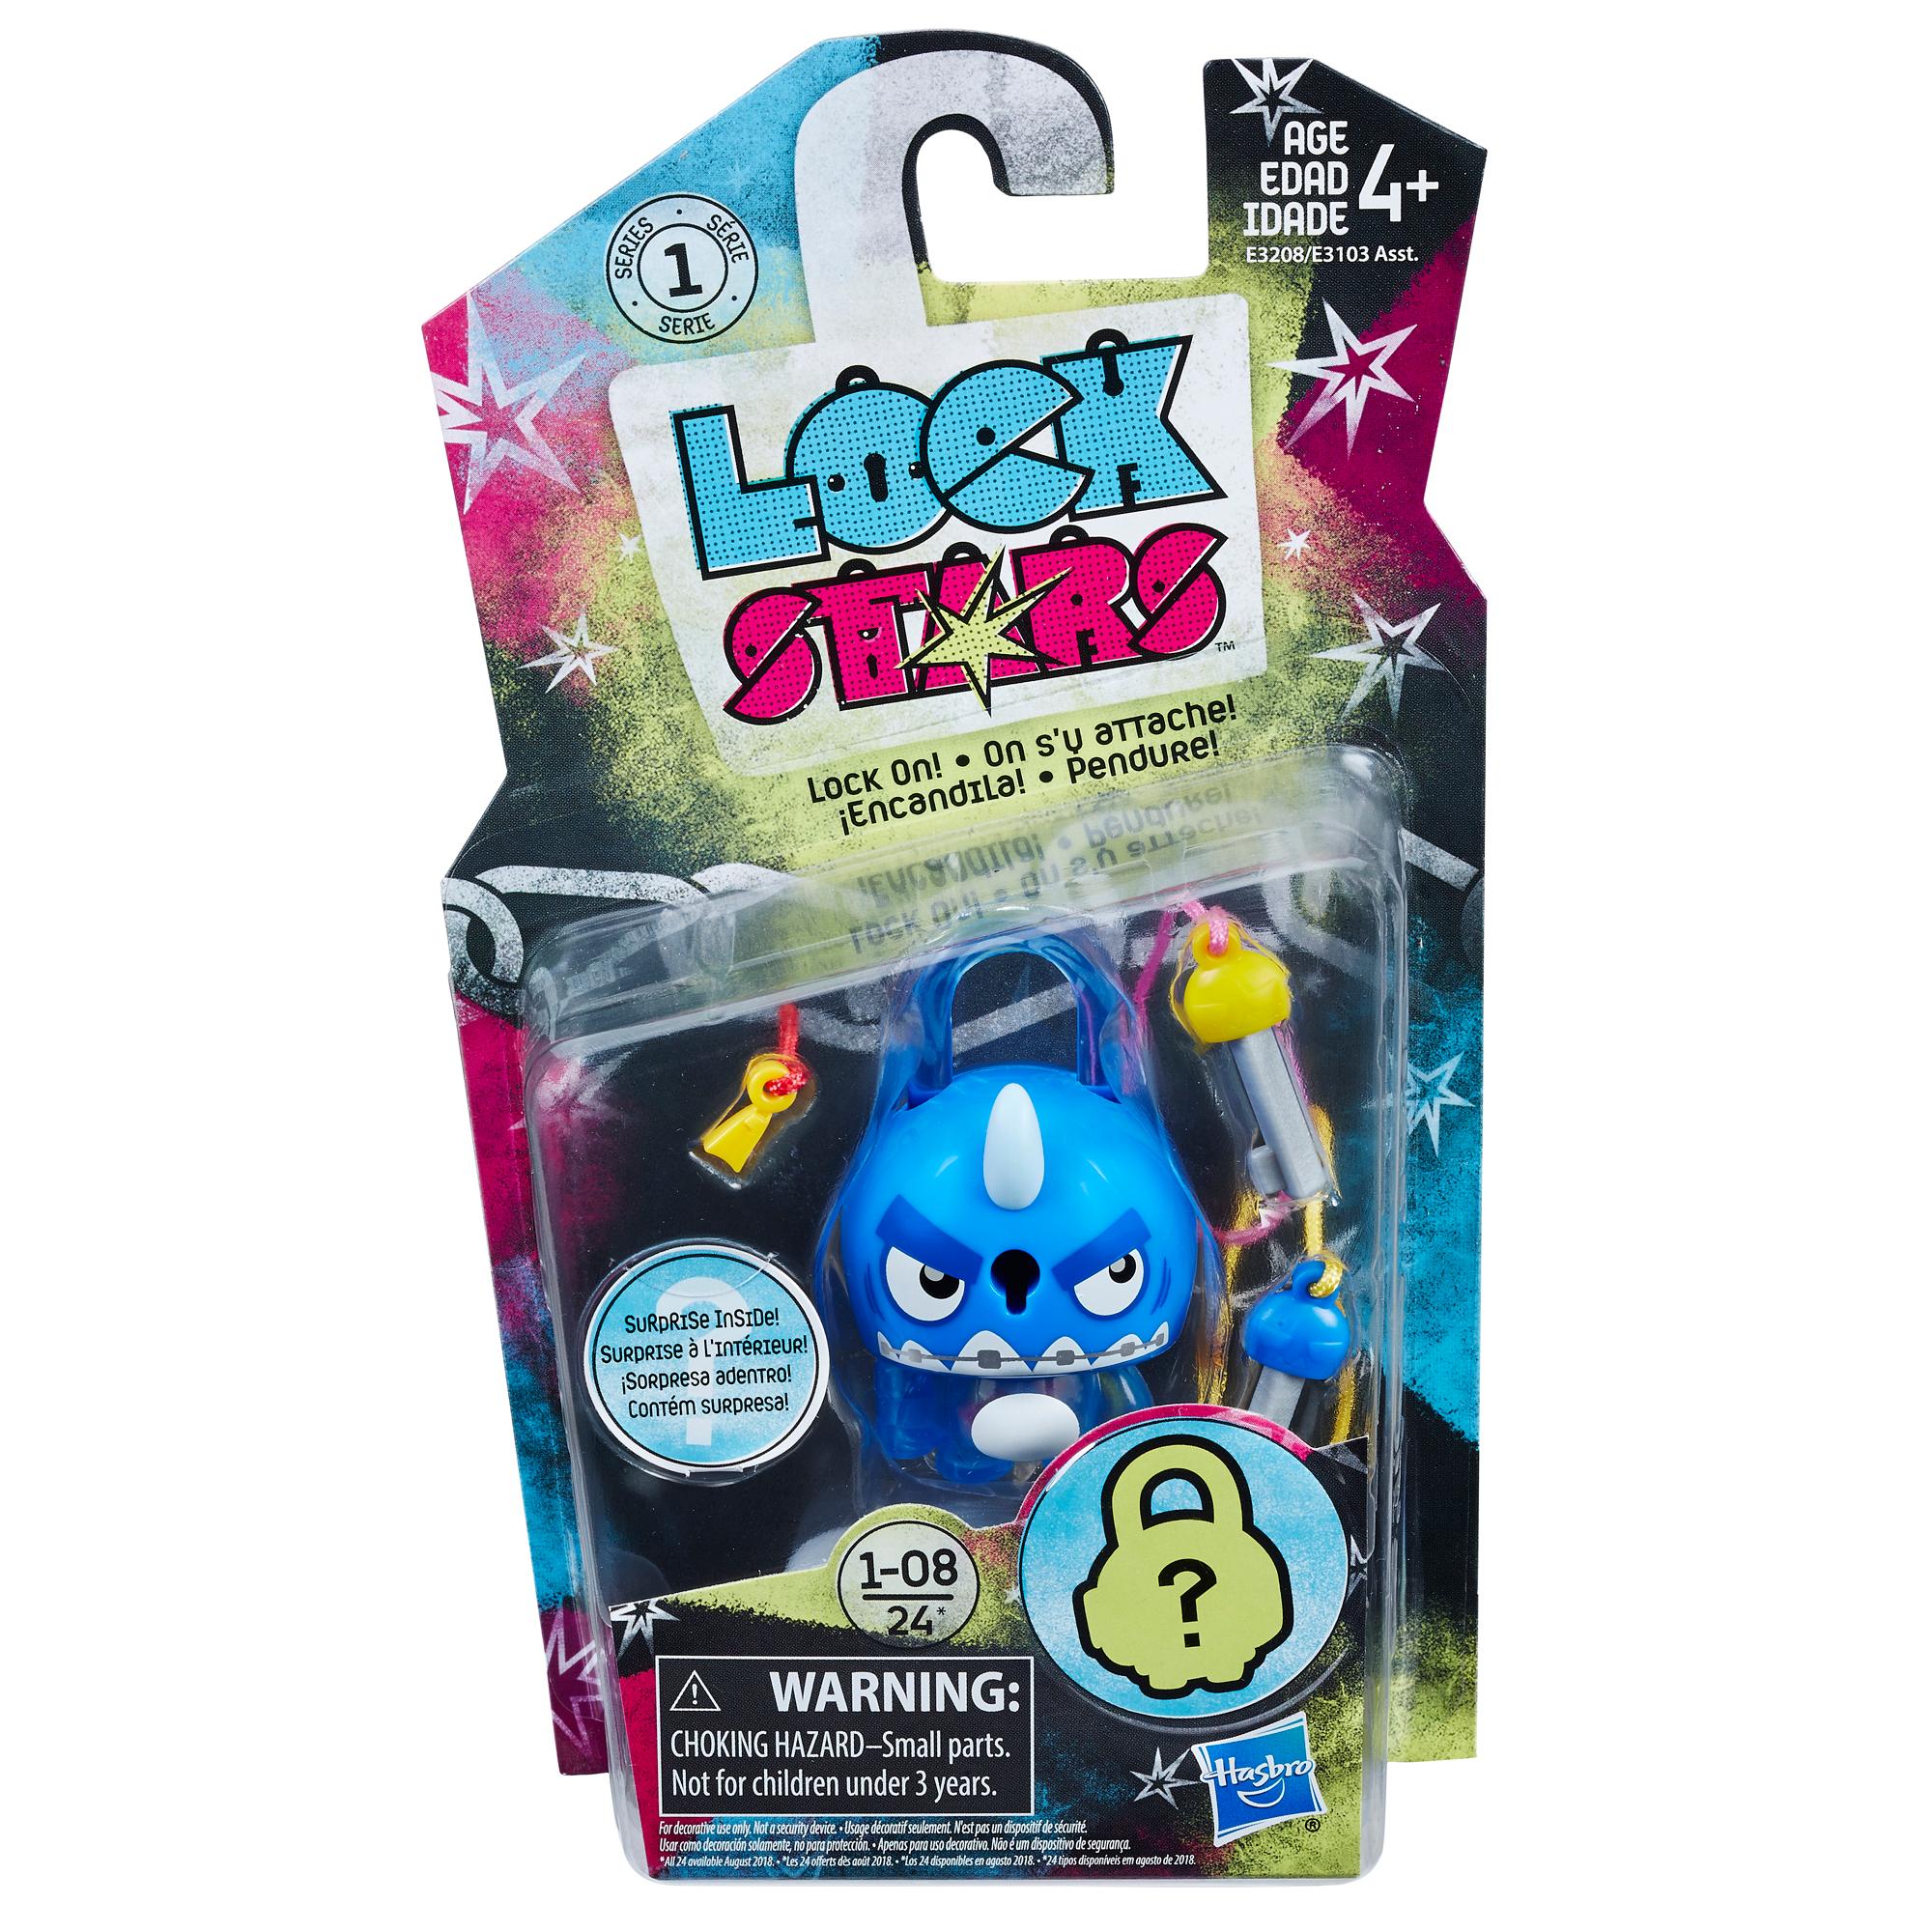 Замочек с секретом Lockstar - Акула, серия 1